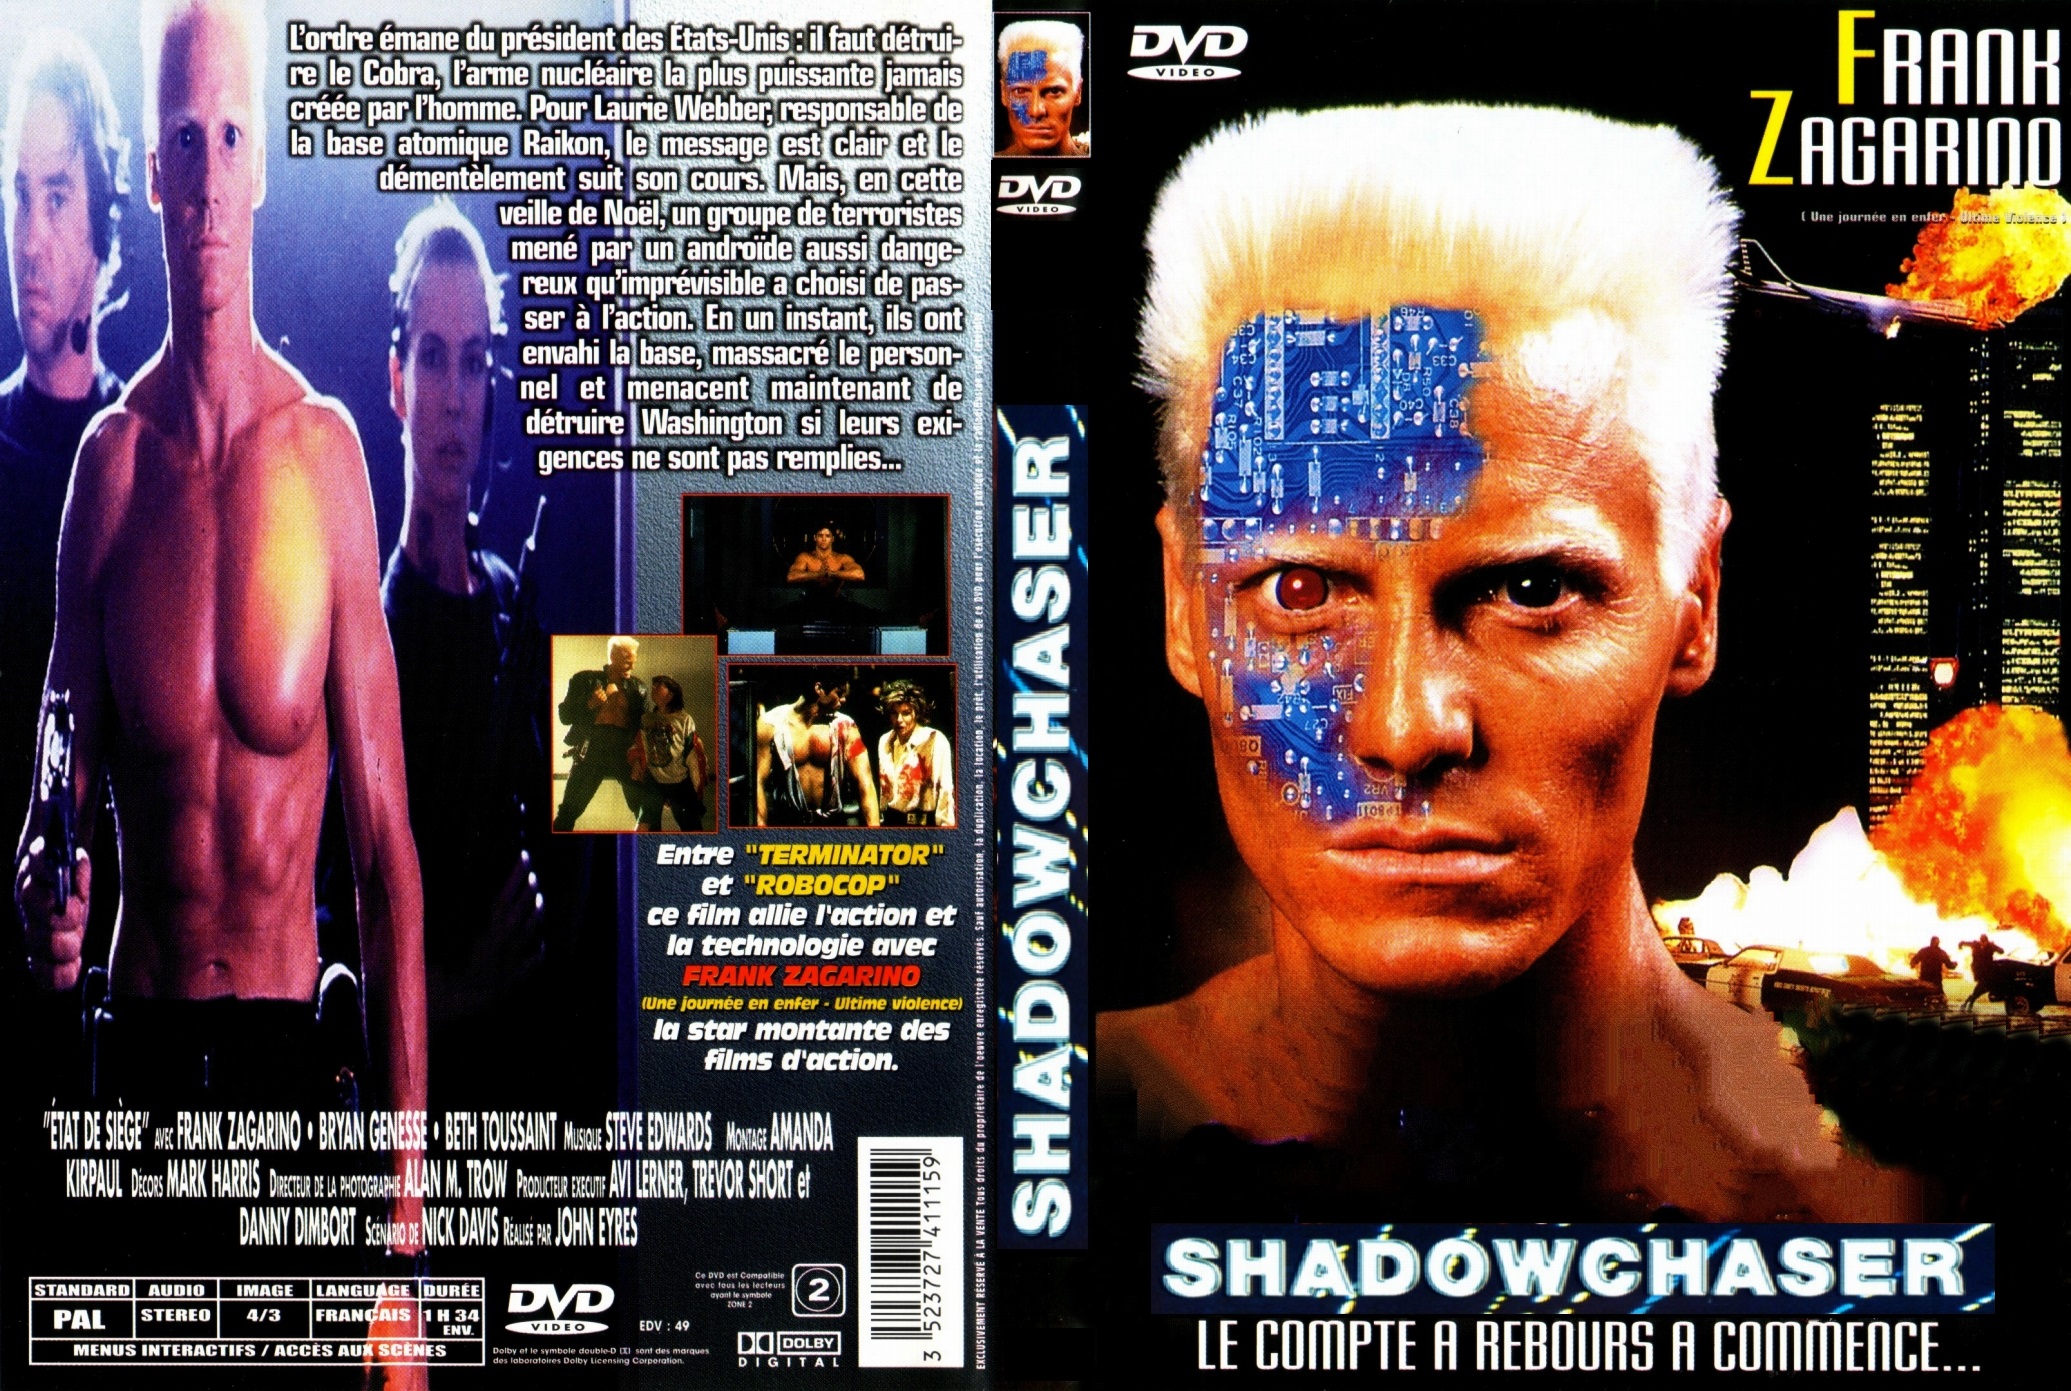 Jaquette DVD Shadowchaser custom 